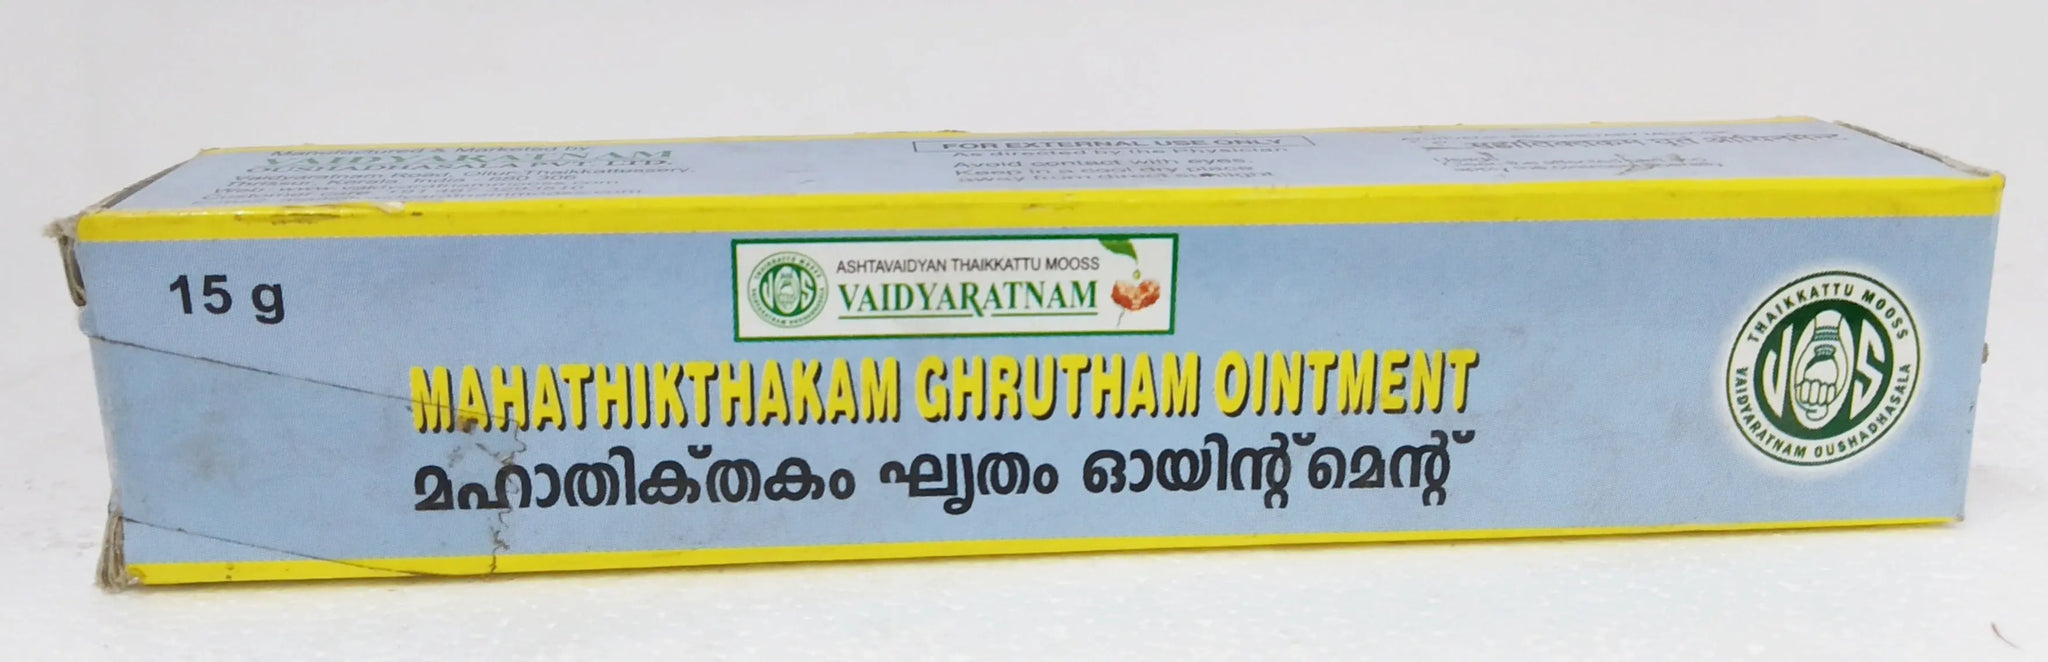 Vaidyaratnam Mahathikthakam Ghrutham Ointment 15g Vaidyaratnam